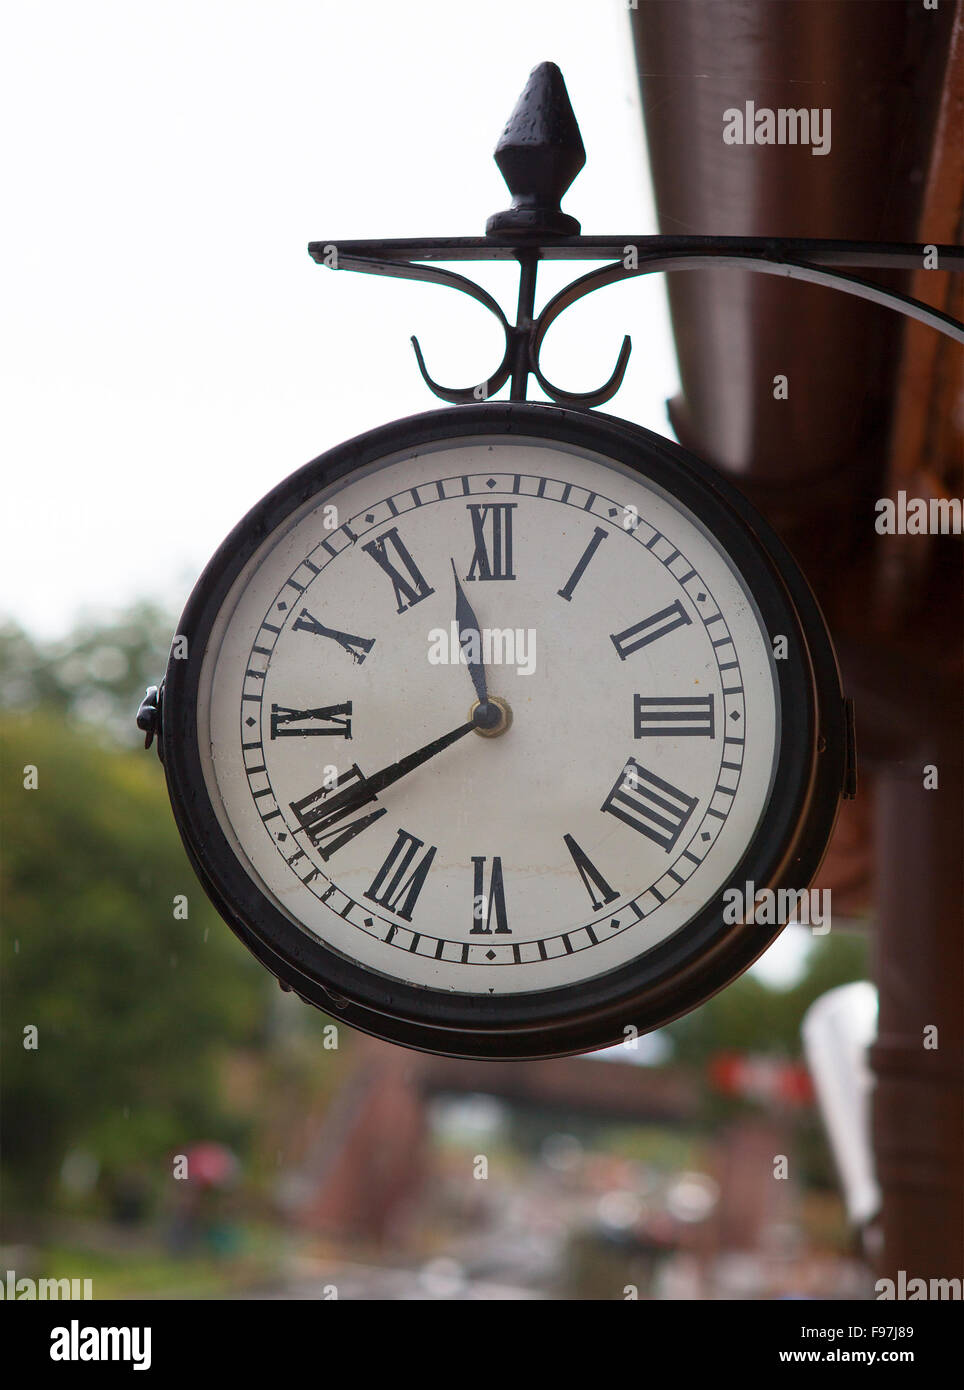 Viejo reloj de ferrocarril fotografías e imágenes de alta - Alamy